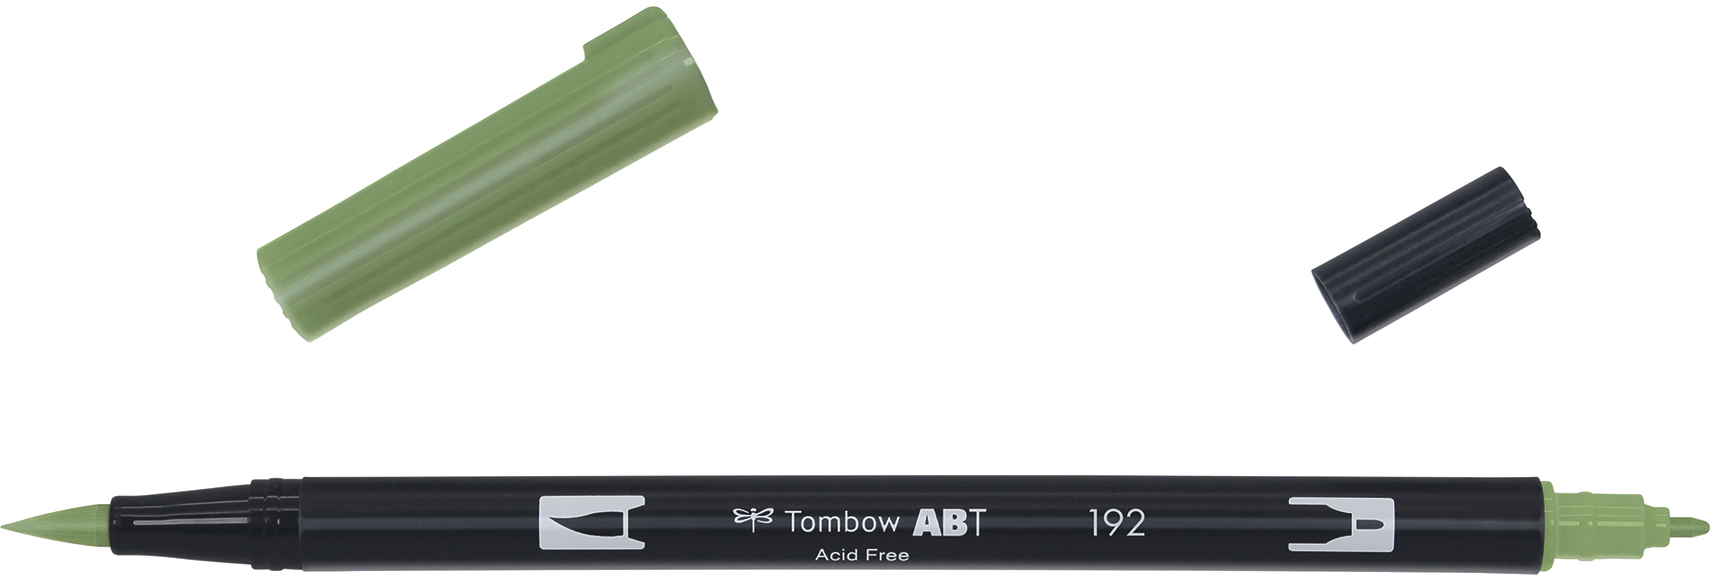 TOMBOW Dual Brush Pen ABT 192 aspargus